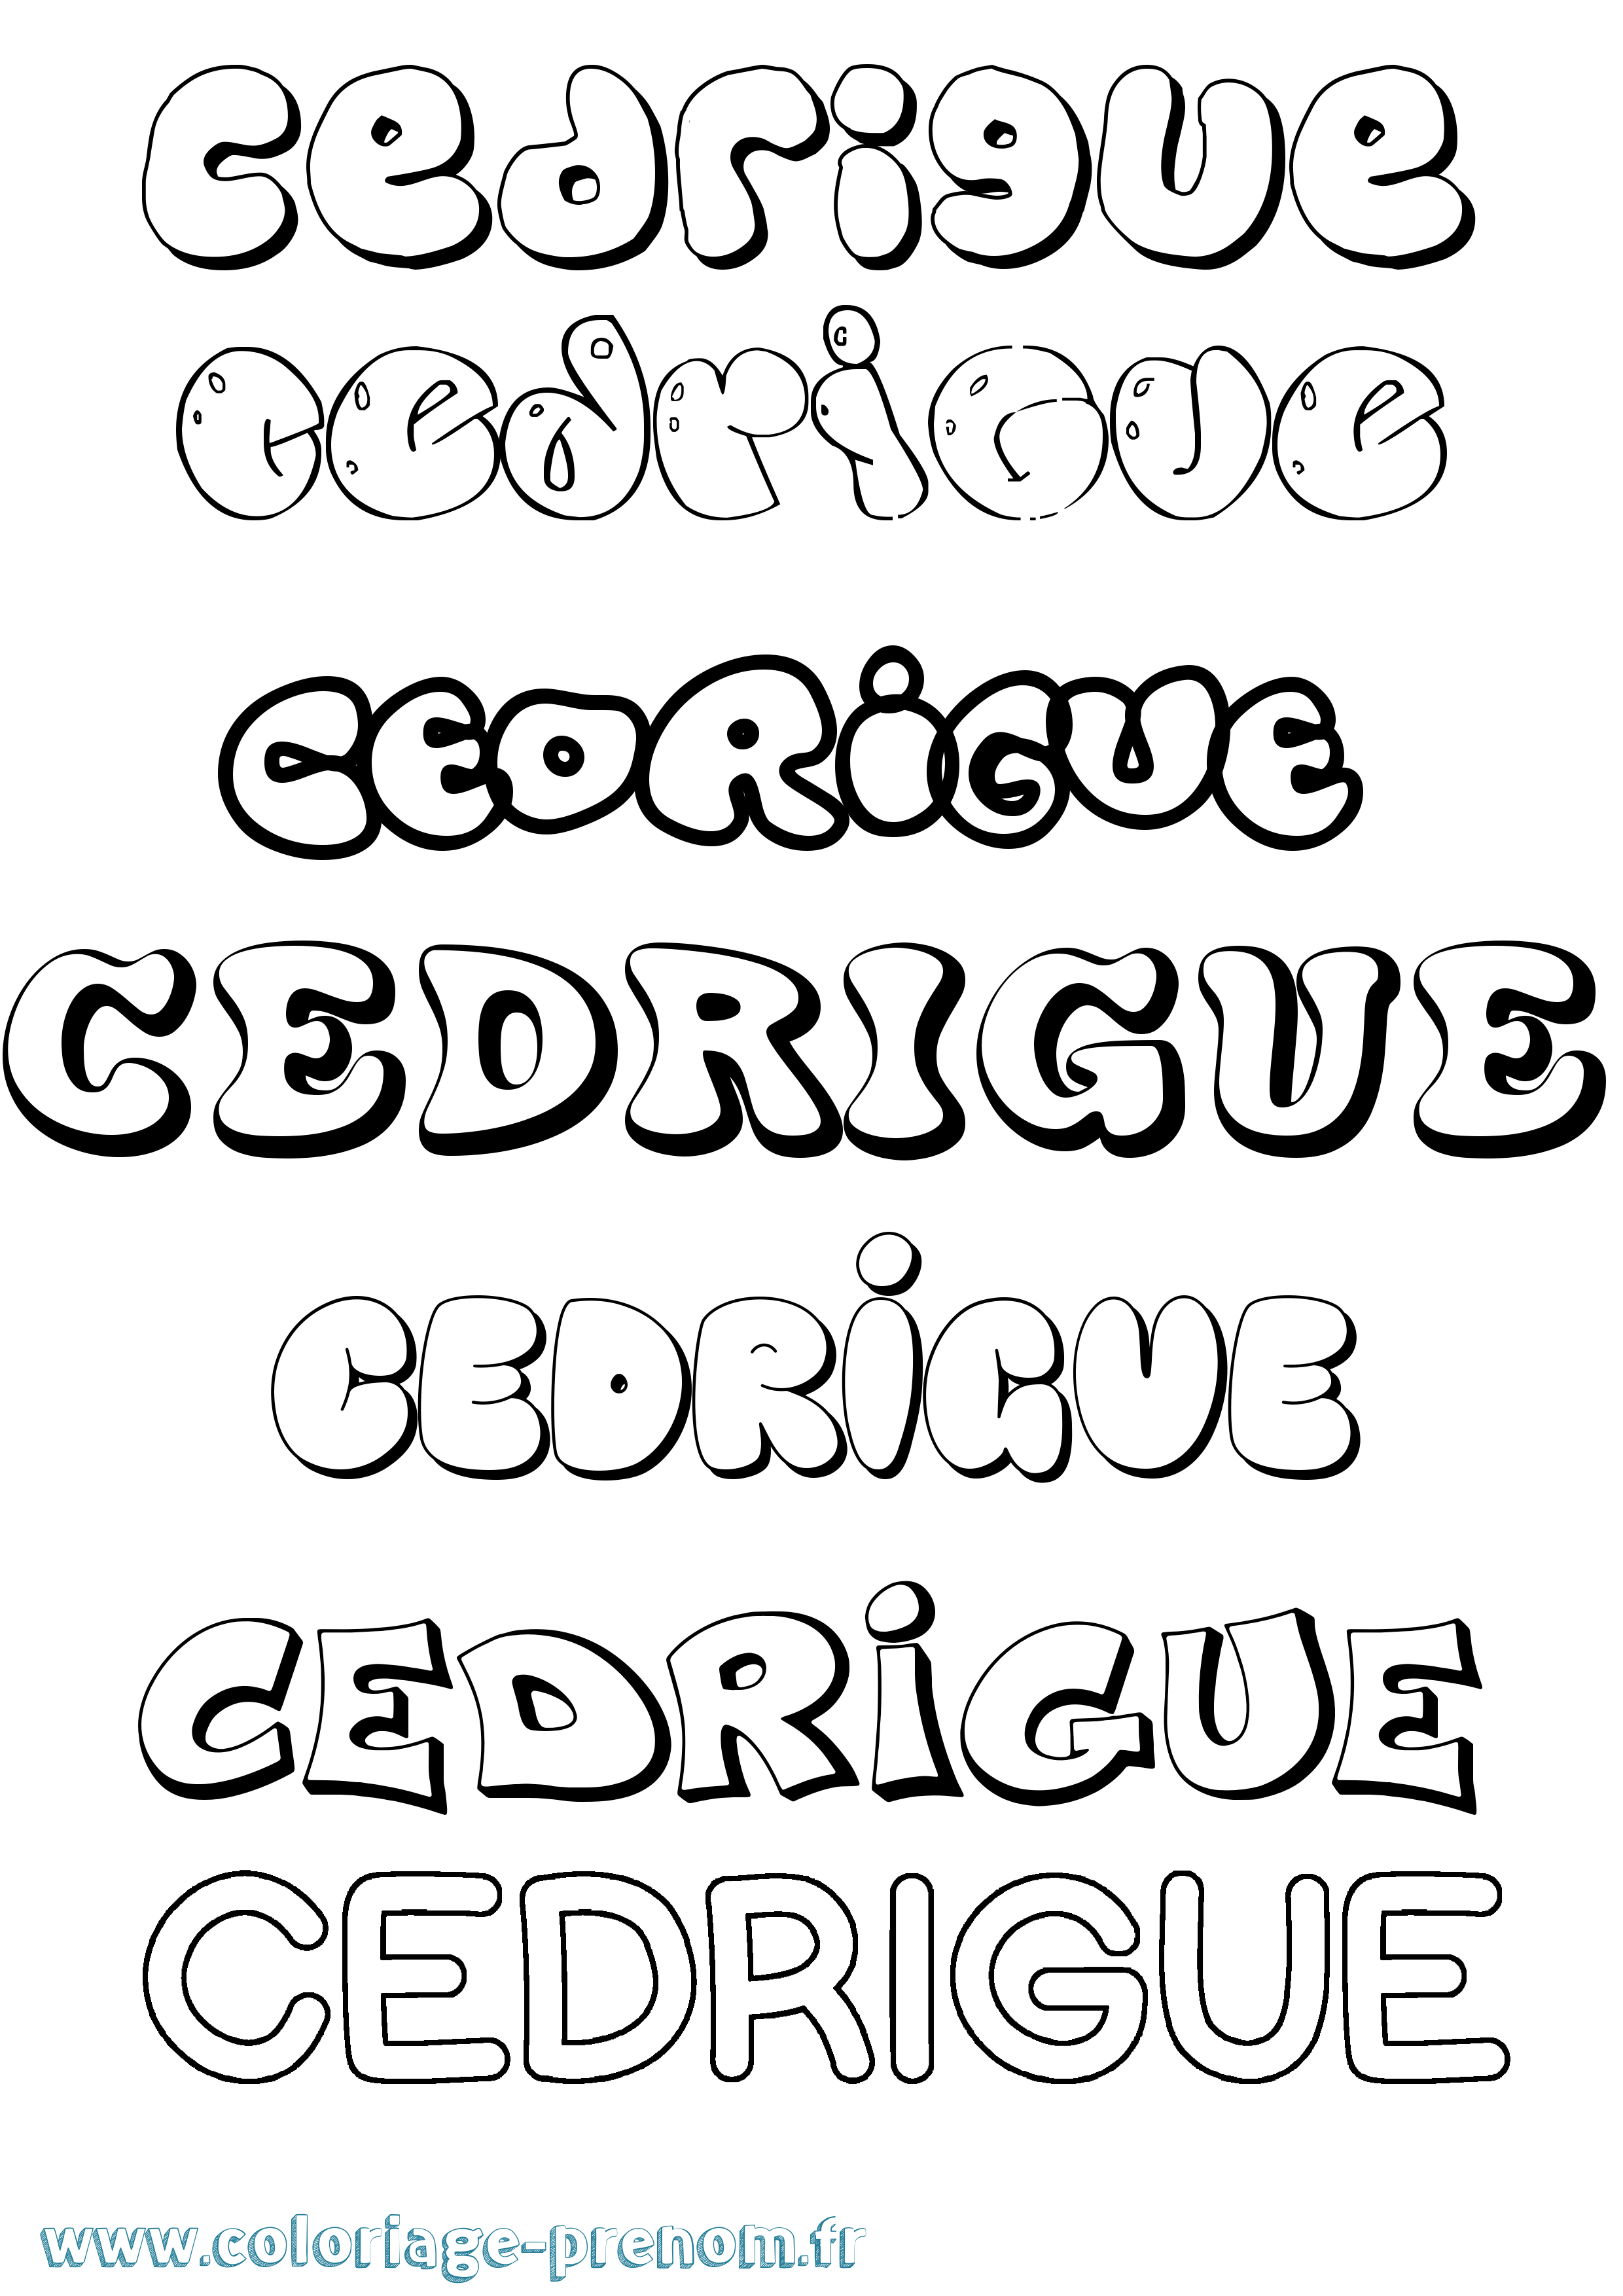 Coloriage prénom Cedrigue Bubble